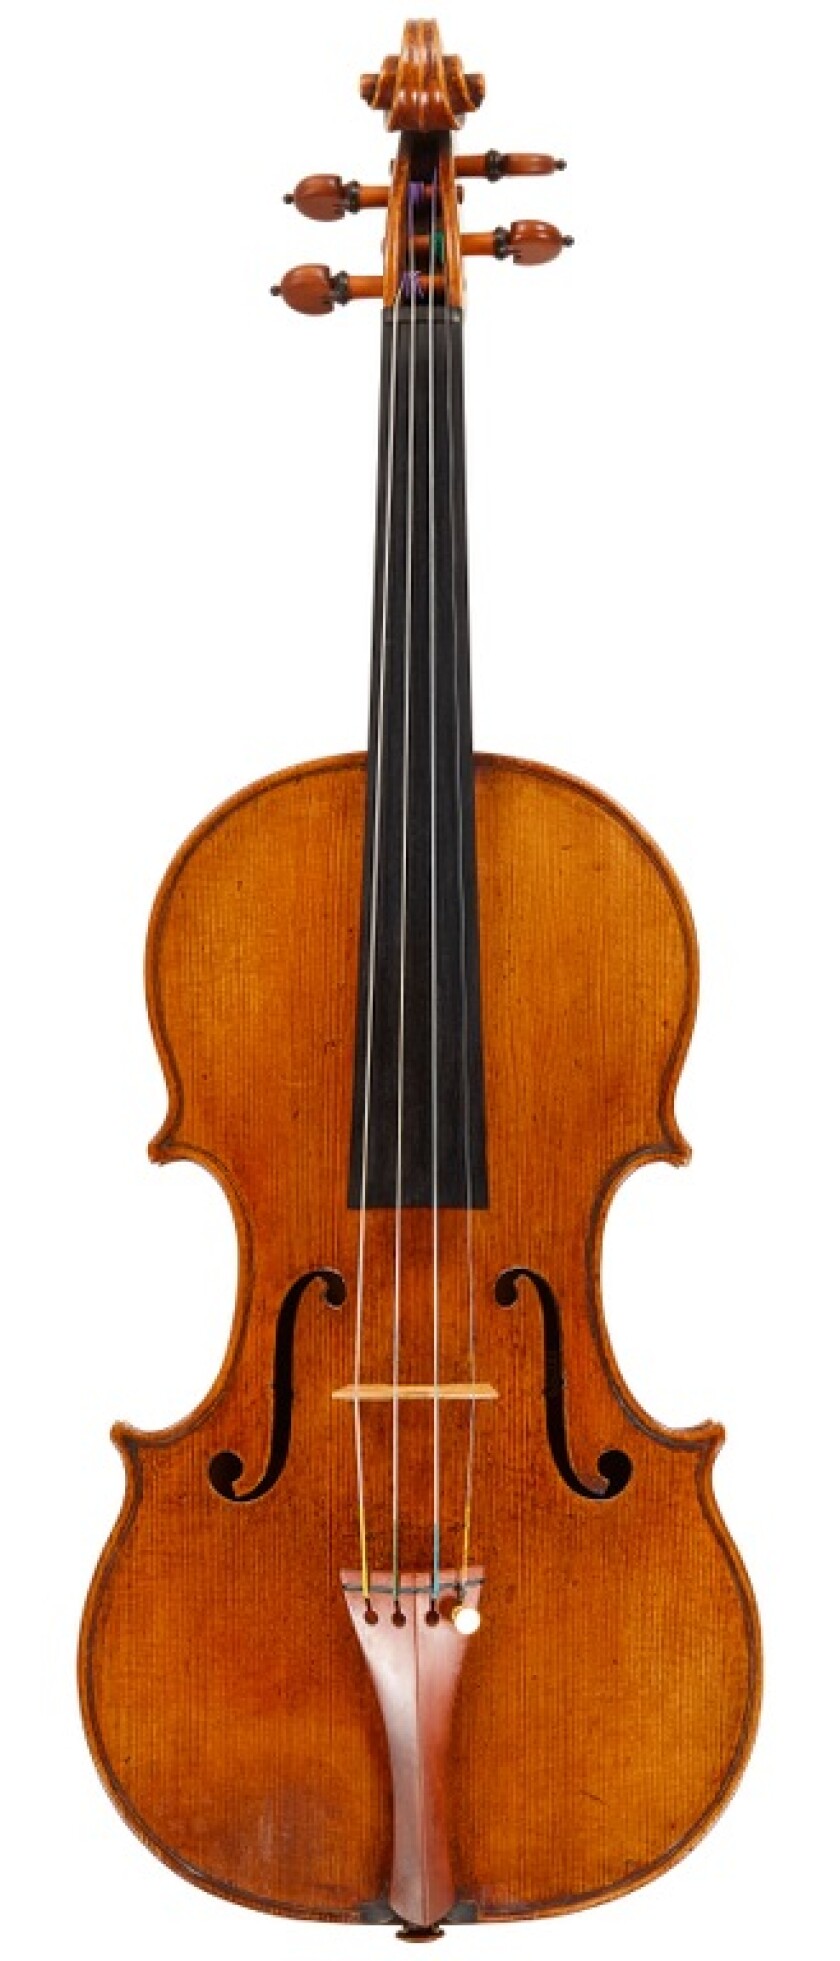 Rare 1710 violin stolen from art dealer's Los Feliz home - Los Angeles Times